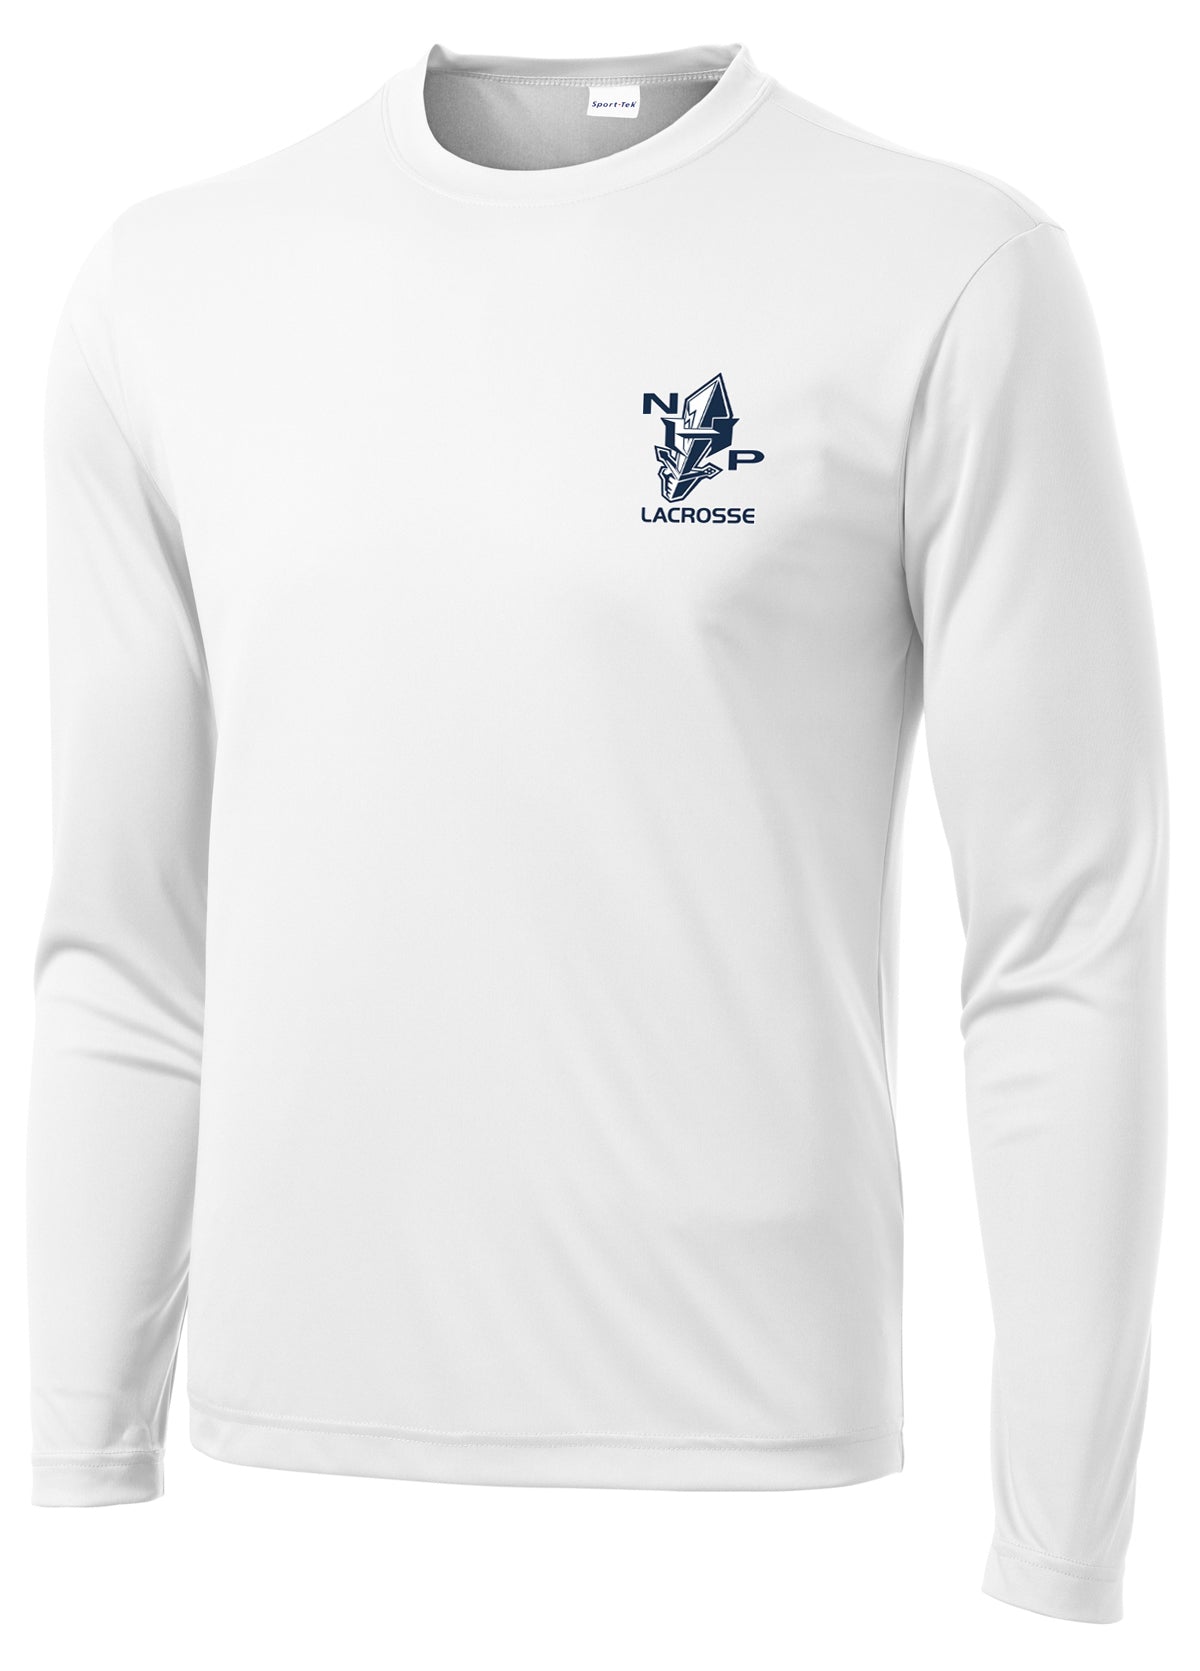 New Hyde Park HS Lacrosse Long Sleeve Performance Shirt